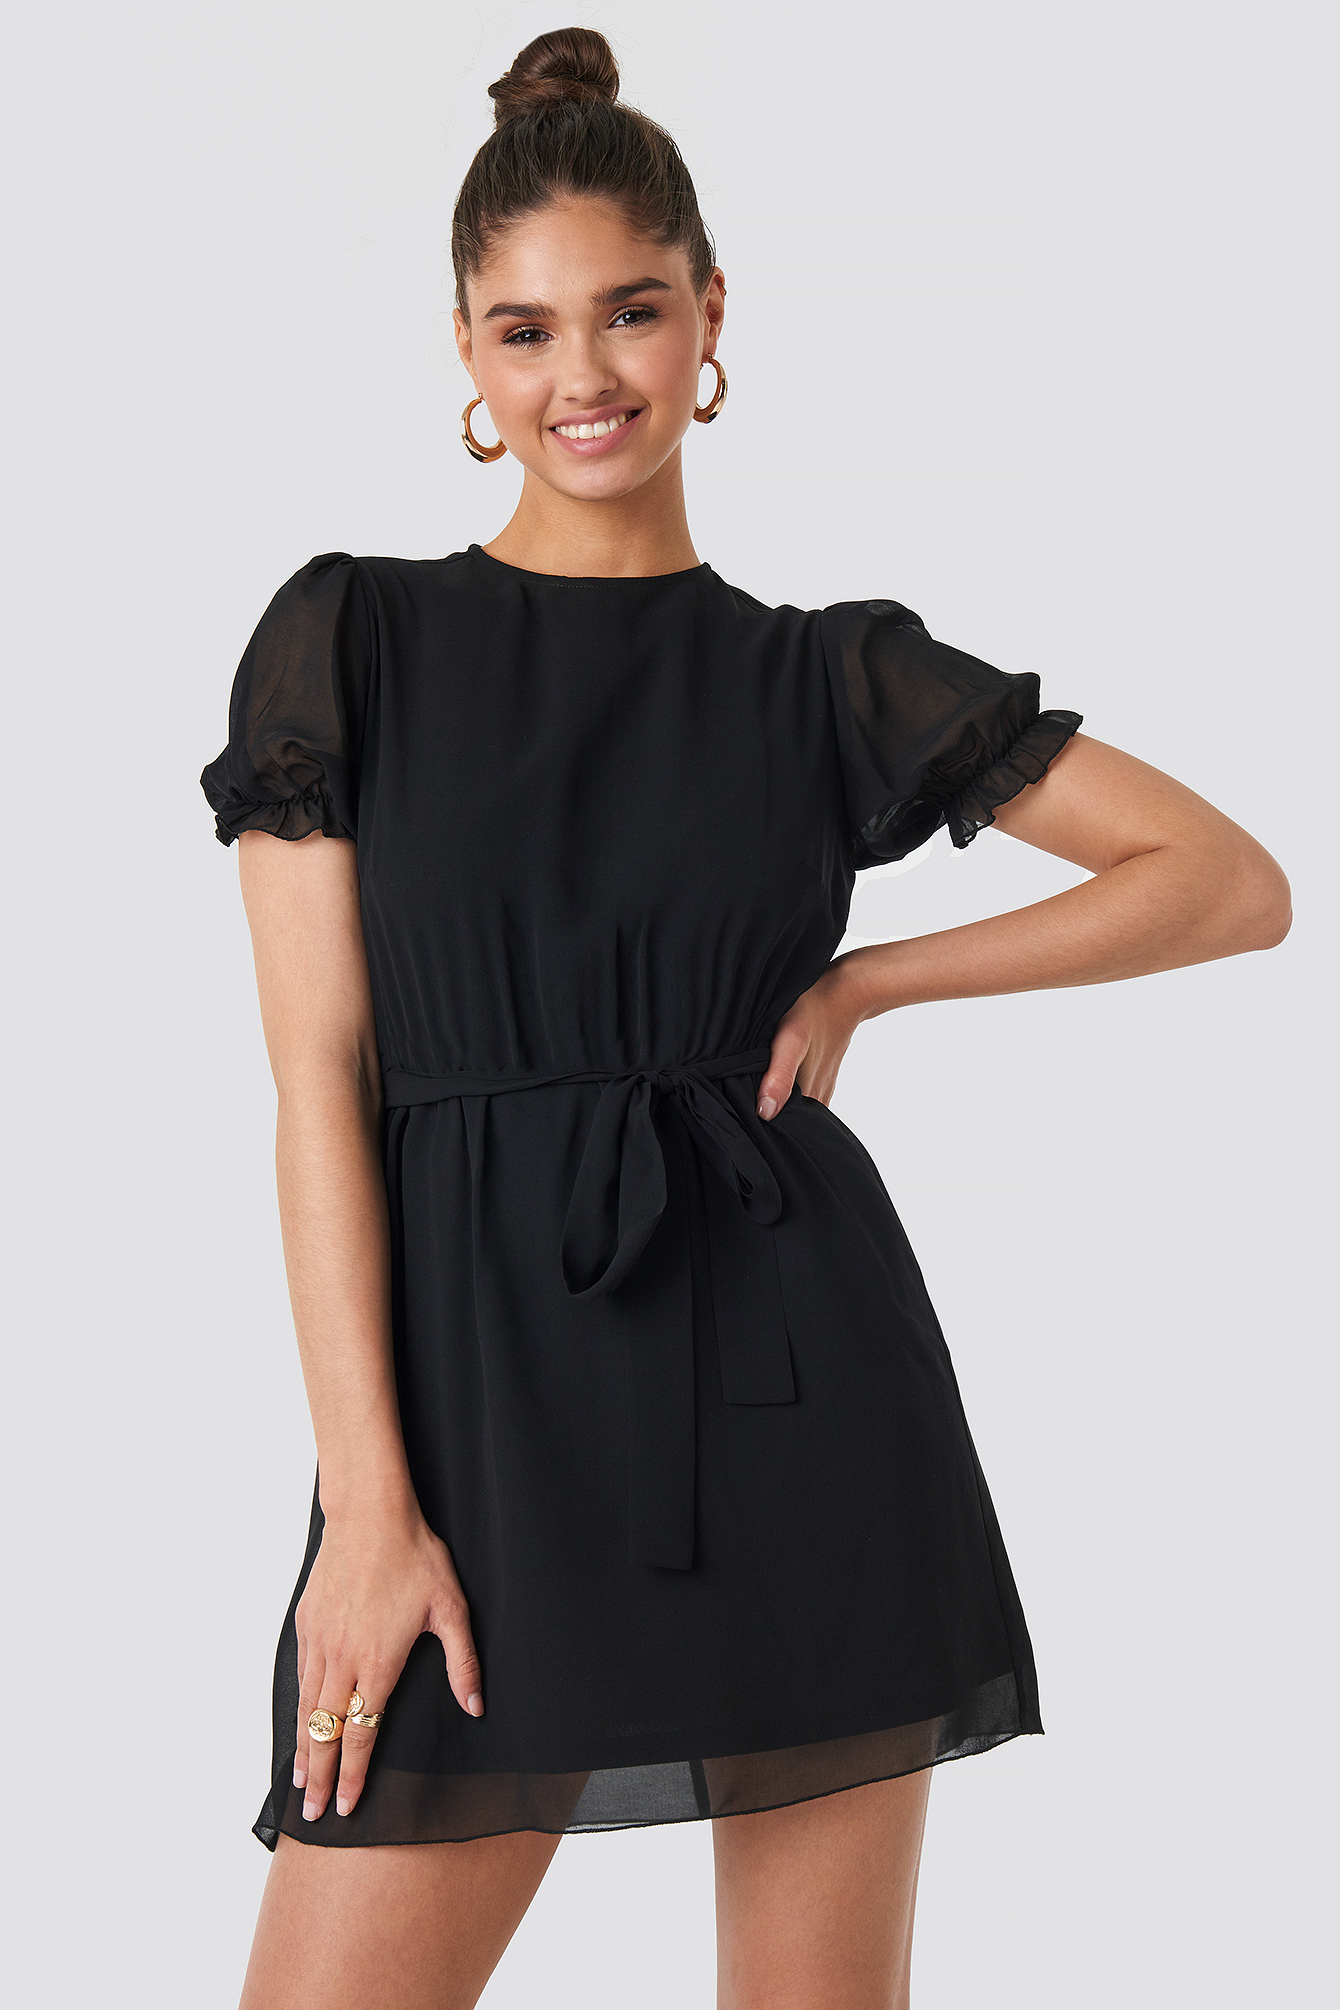 Black Short Sleeve Chiffon Dress